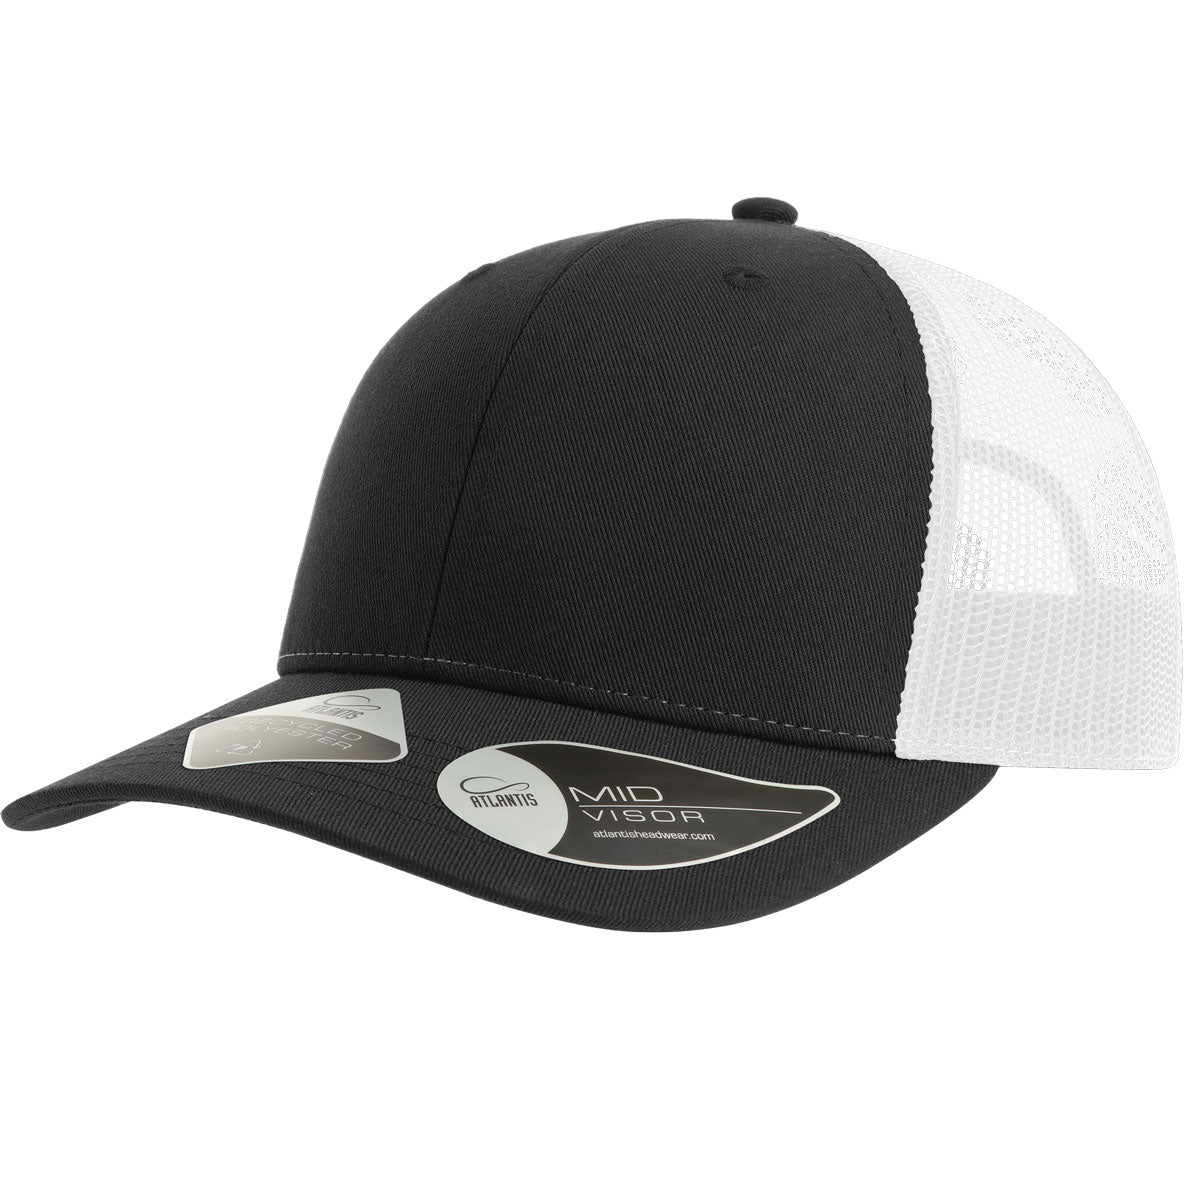 Customizable Atlantis Headwear Bryce Trucker Cap in black and white.